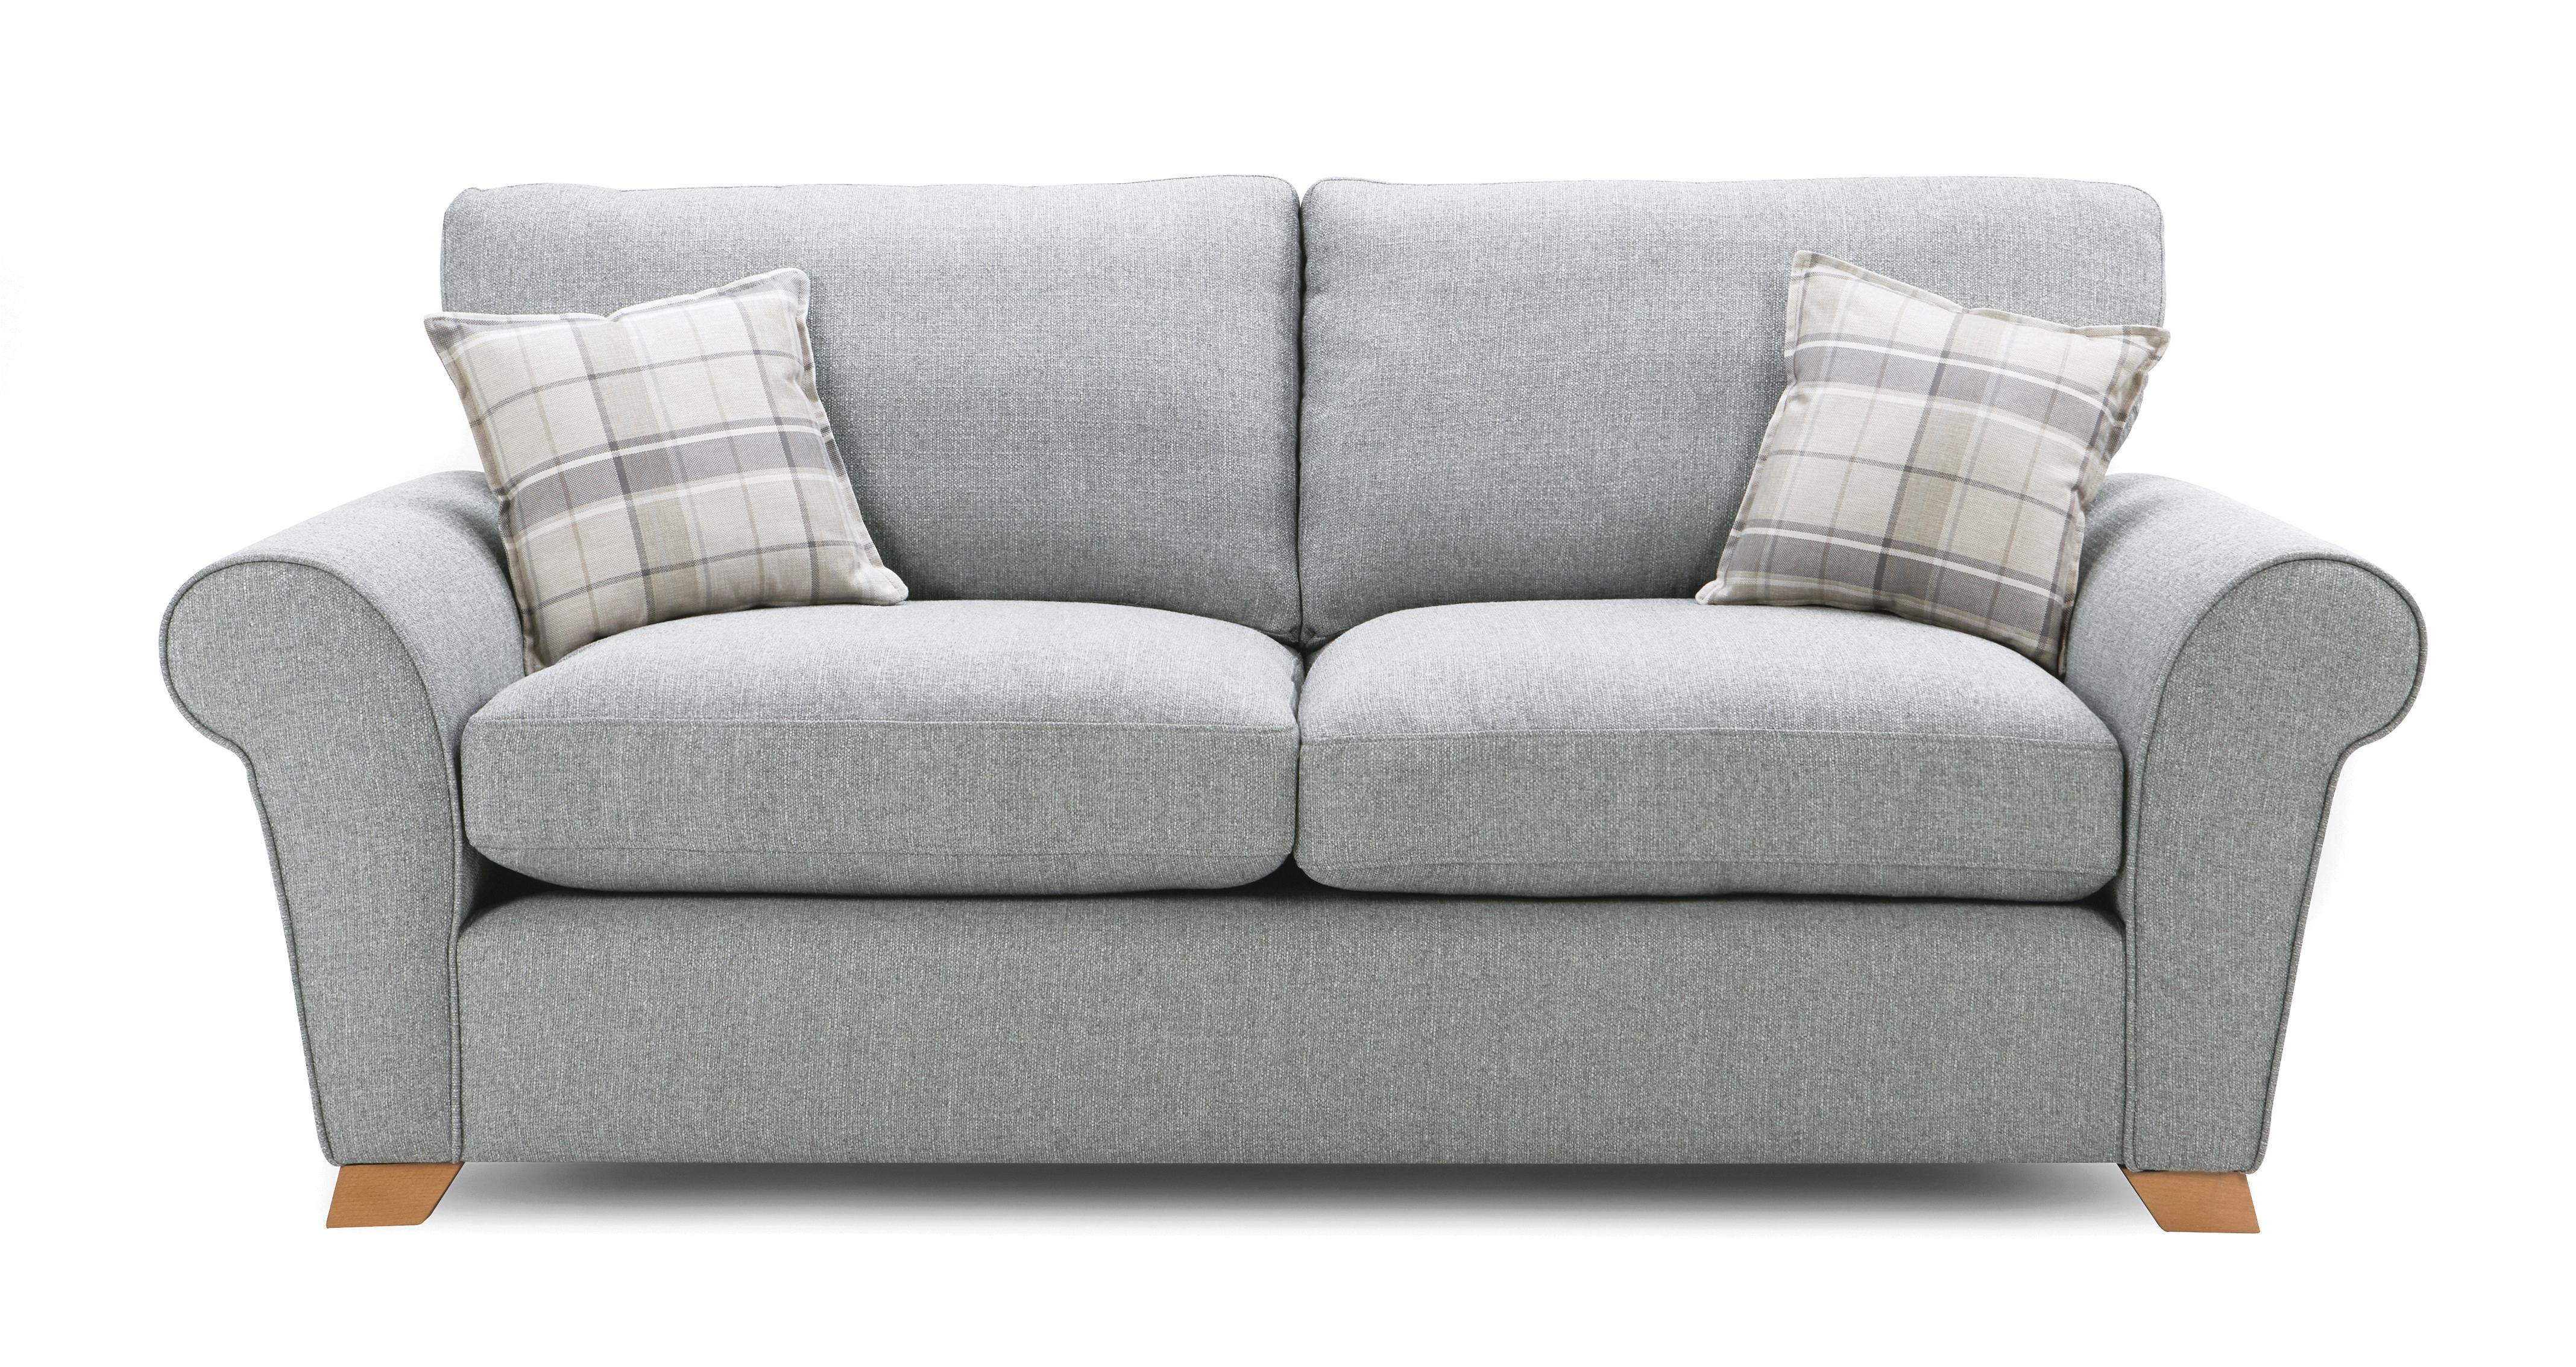 sofa bed for sale brisbane